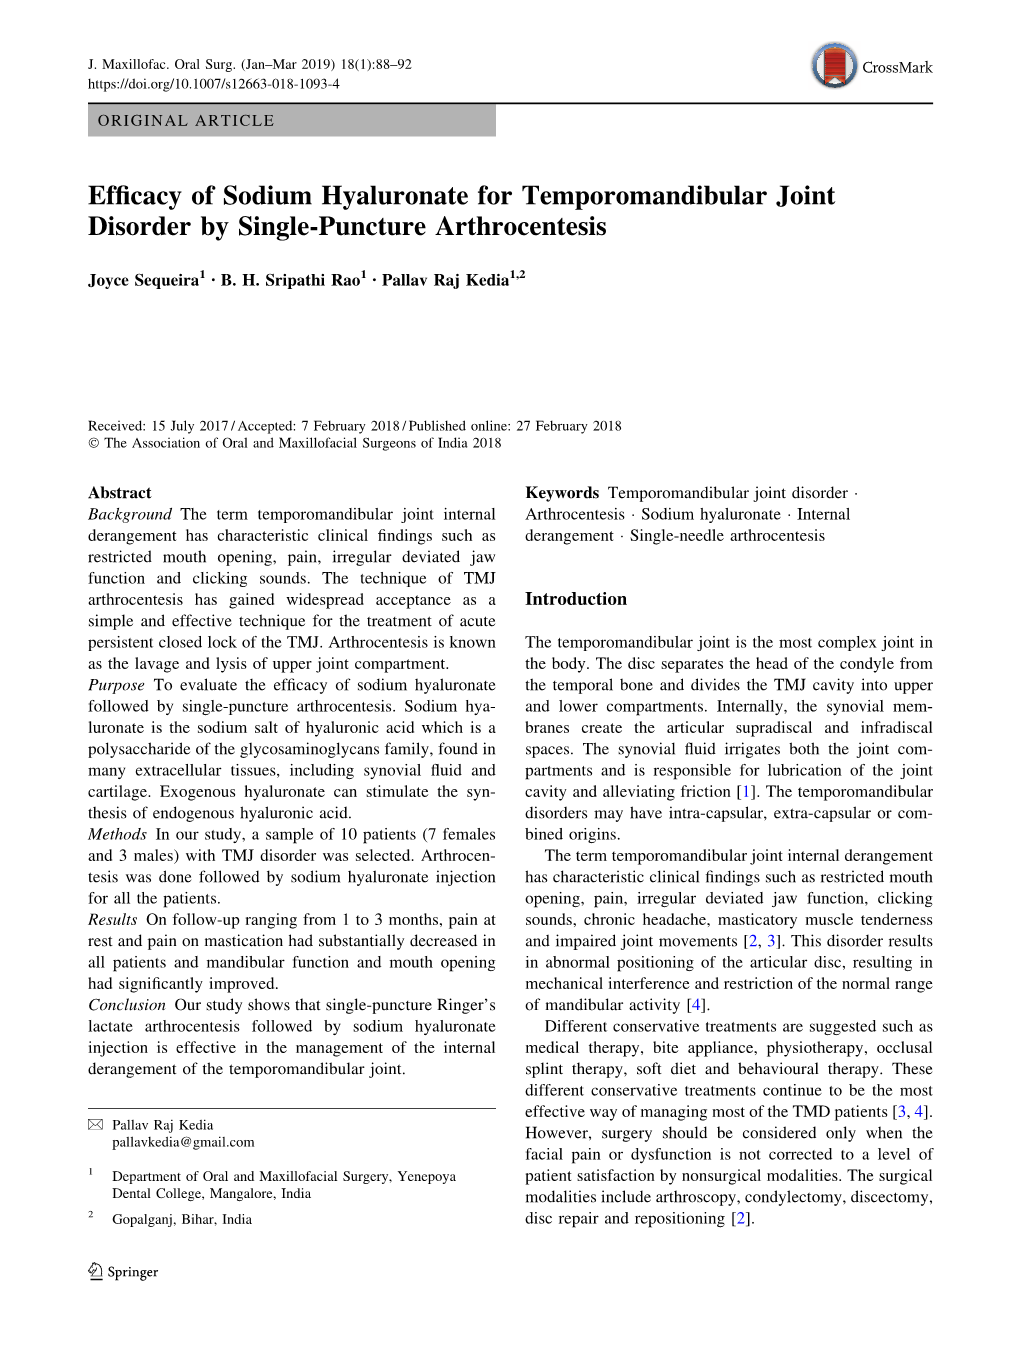 Efficacy of Sodium Hyaluronate for Temporomandibular Joint Disorder